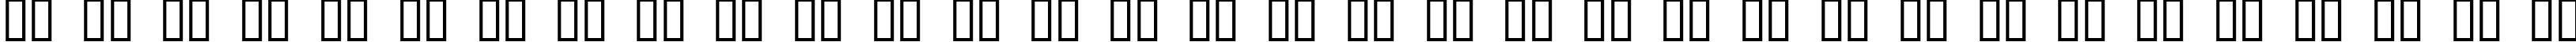 Пример написания русского алфавита шрифтом Corazon